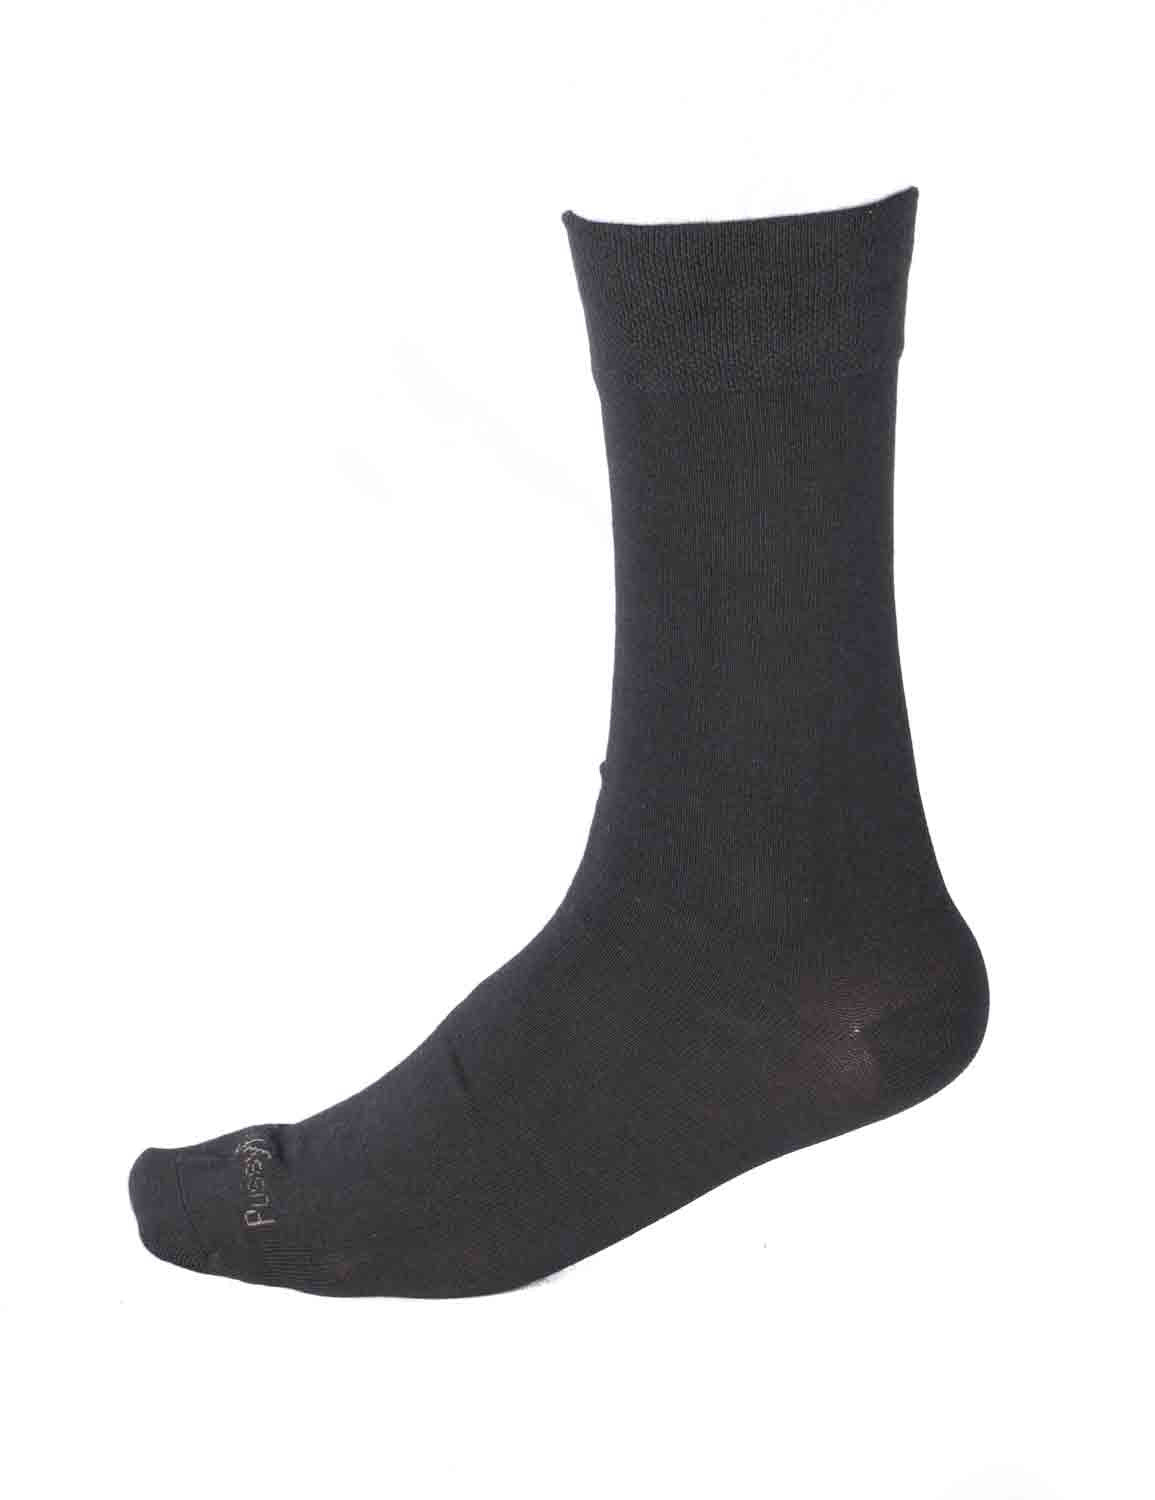 Pussyfoot Non Tight Bamboo/Cotton Health Socks - Black